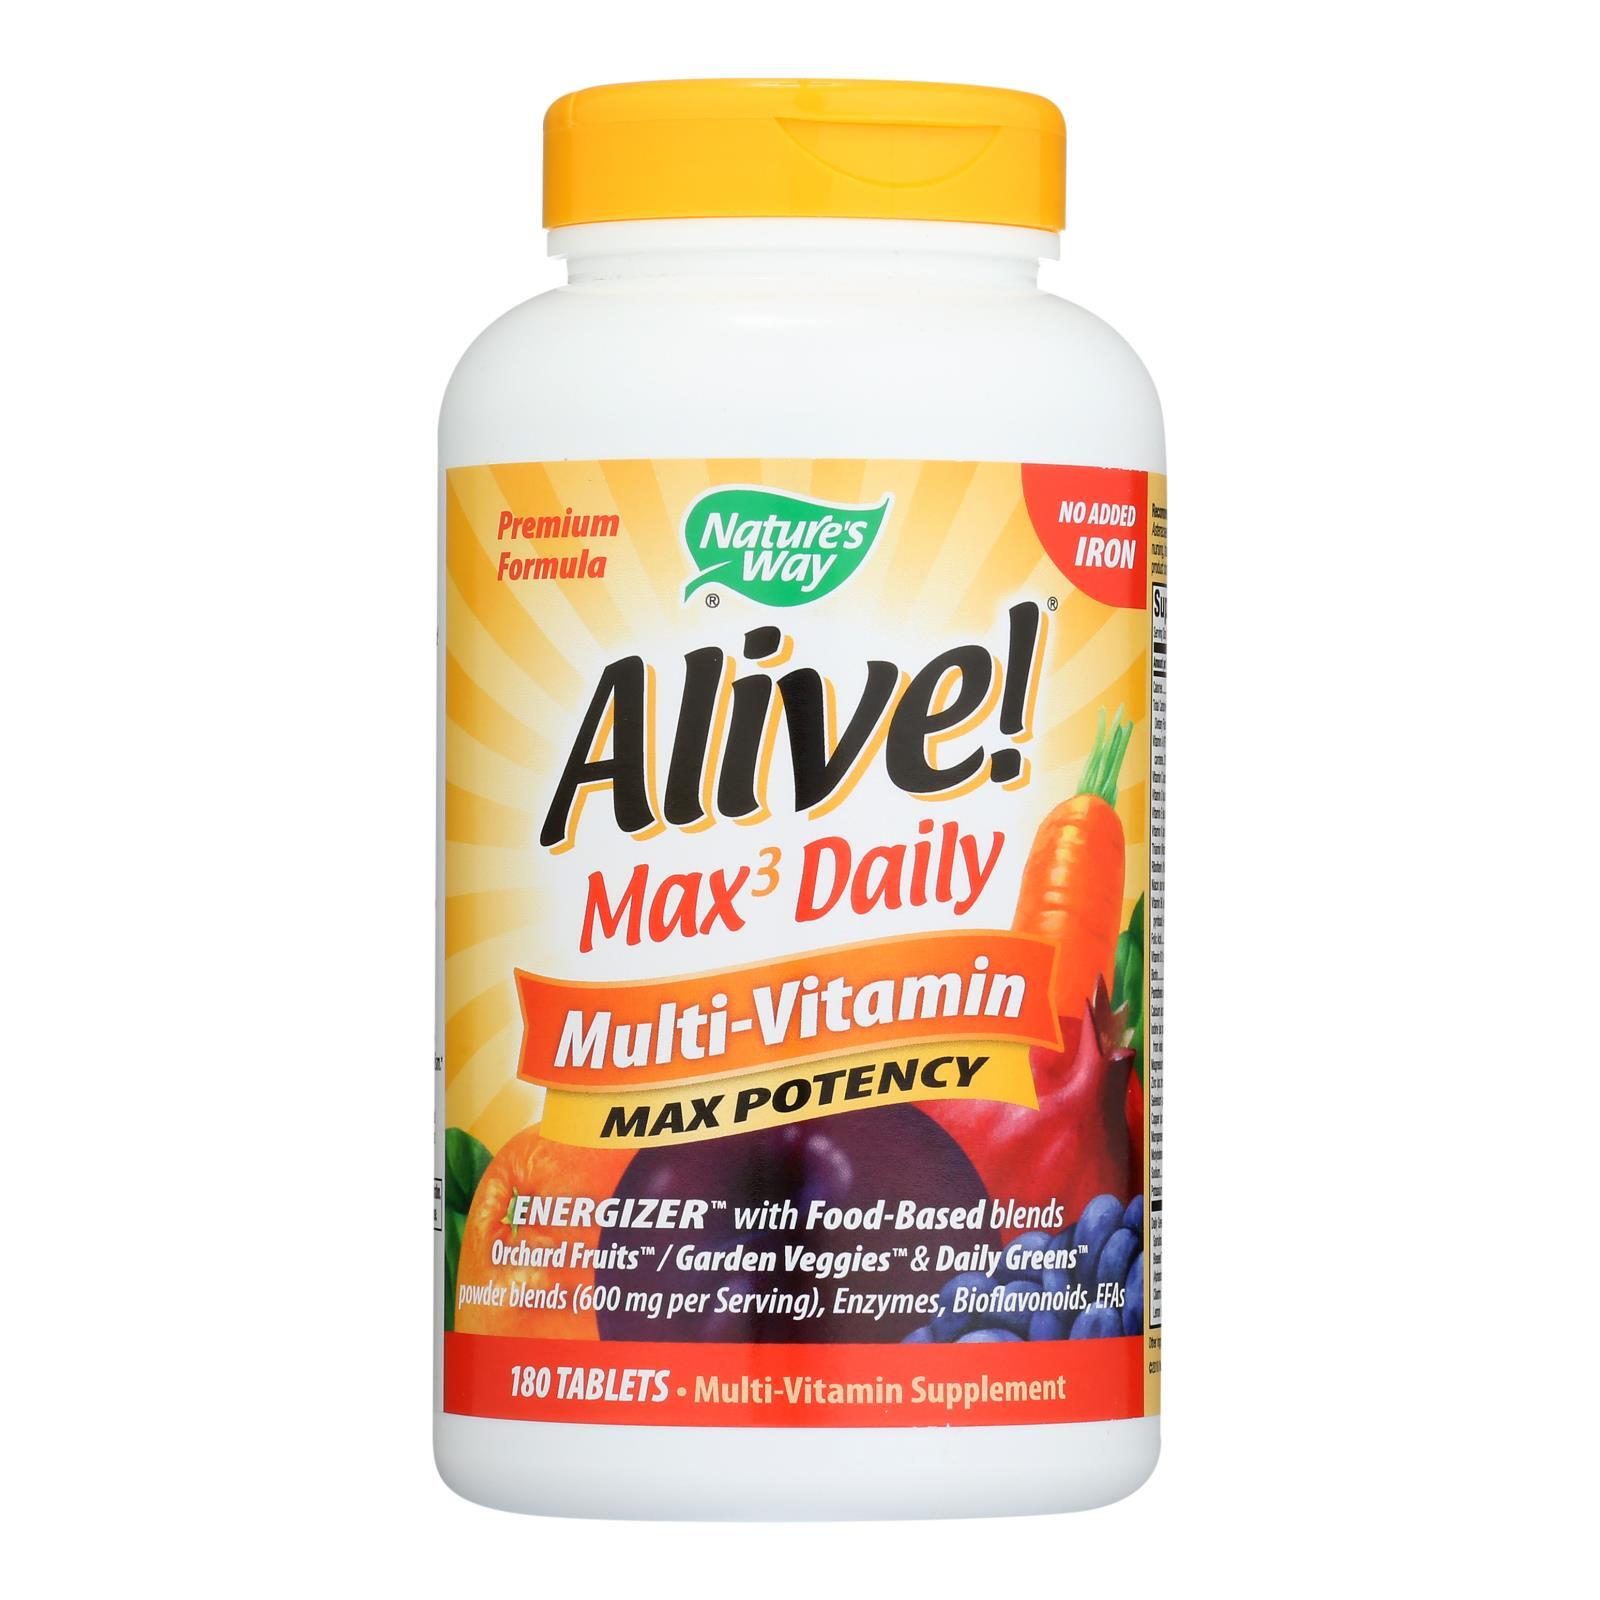 Витамины при сухости кожи тела. Дейли Макс витамины. Alive! Max3 Daily мультивитамины таб. №180. Мультивитамины Аливе. Натурес вай Аливе.